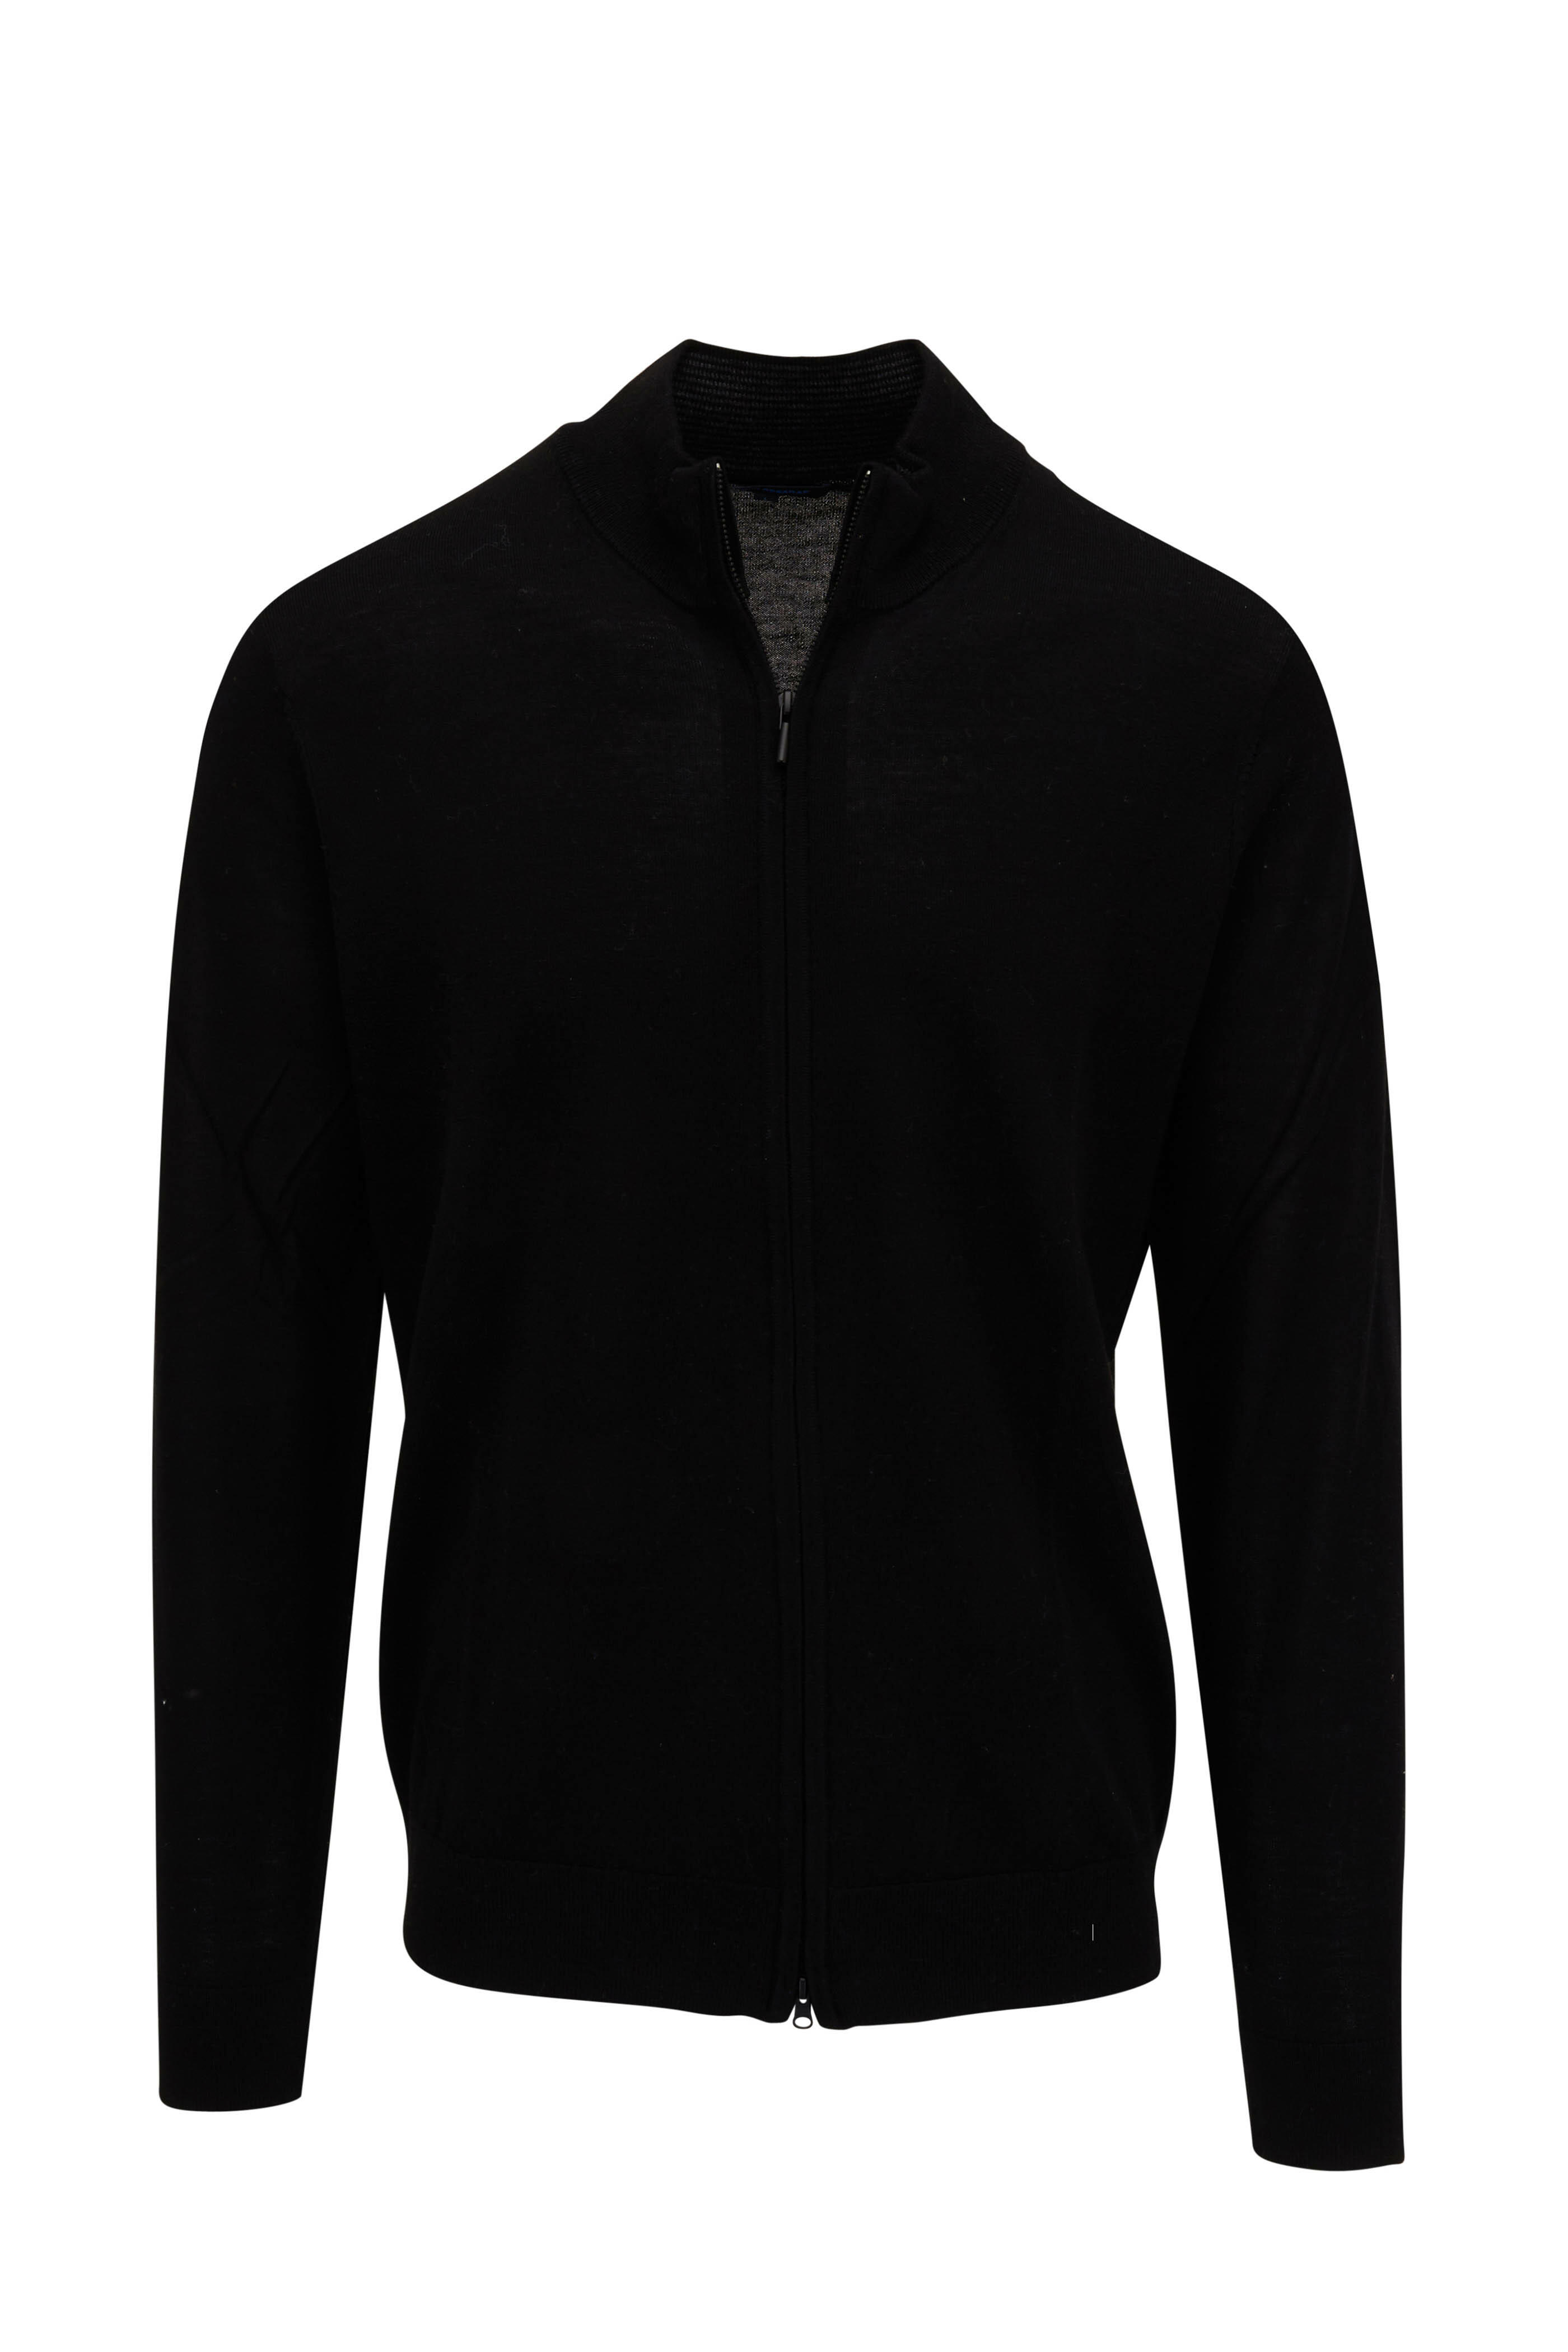 Patrick Assaraf - Black Fine Merino Wool Full Zip Sweater